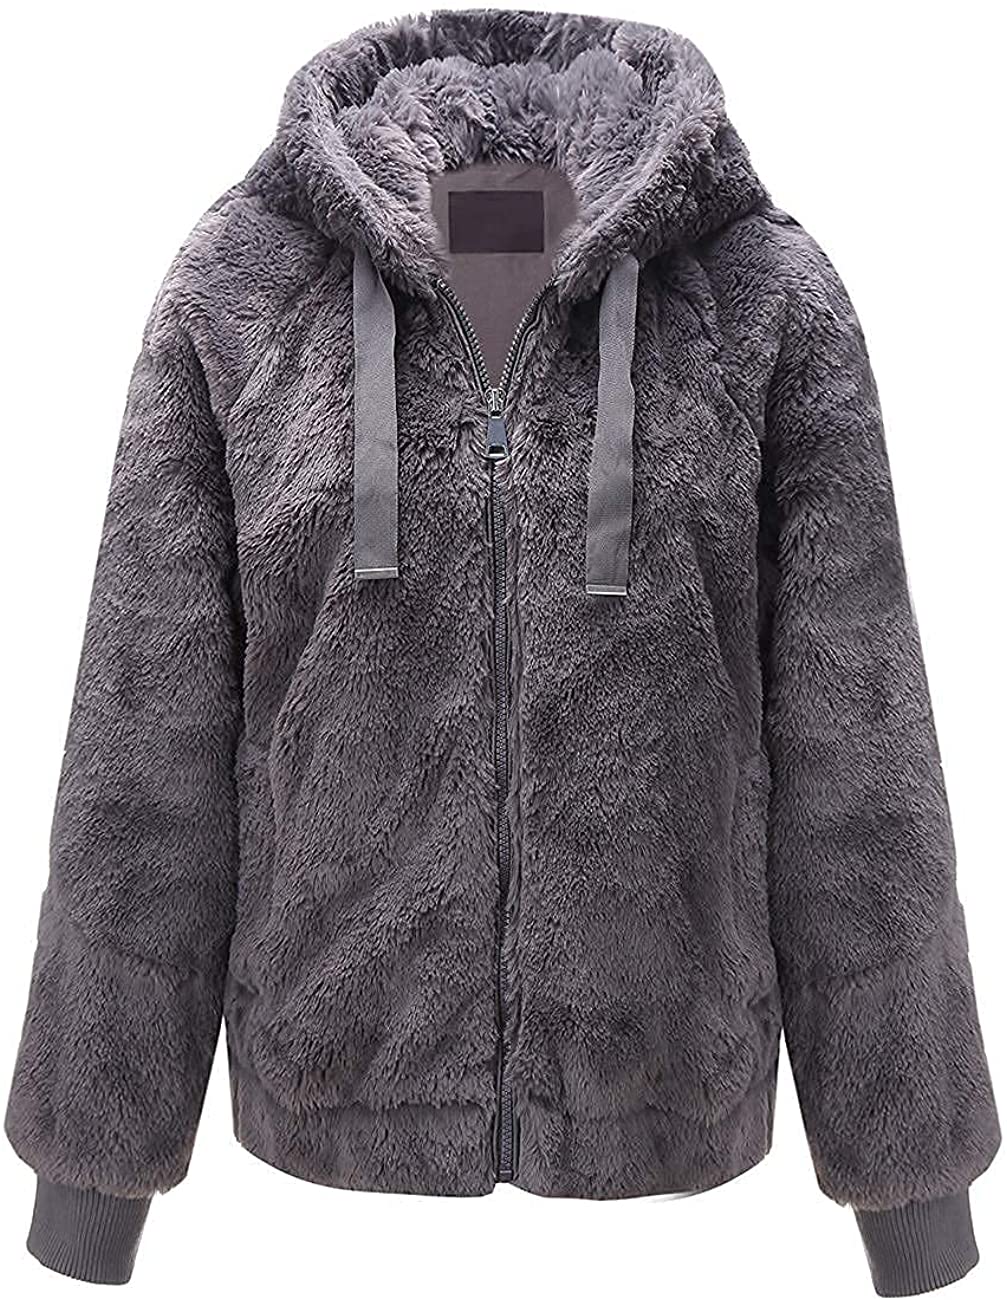 Giolshon Women Faux Fur Fleece Coat Fall and Winter Fashion Puffy Fuzzy Lovely Shearling Shaggy Jacket with Hood 